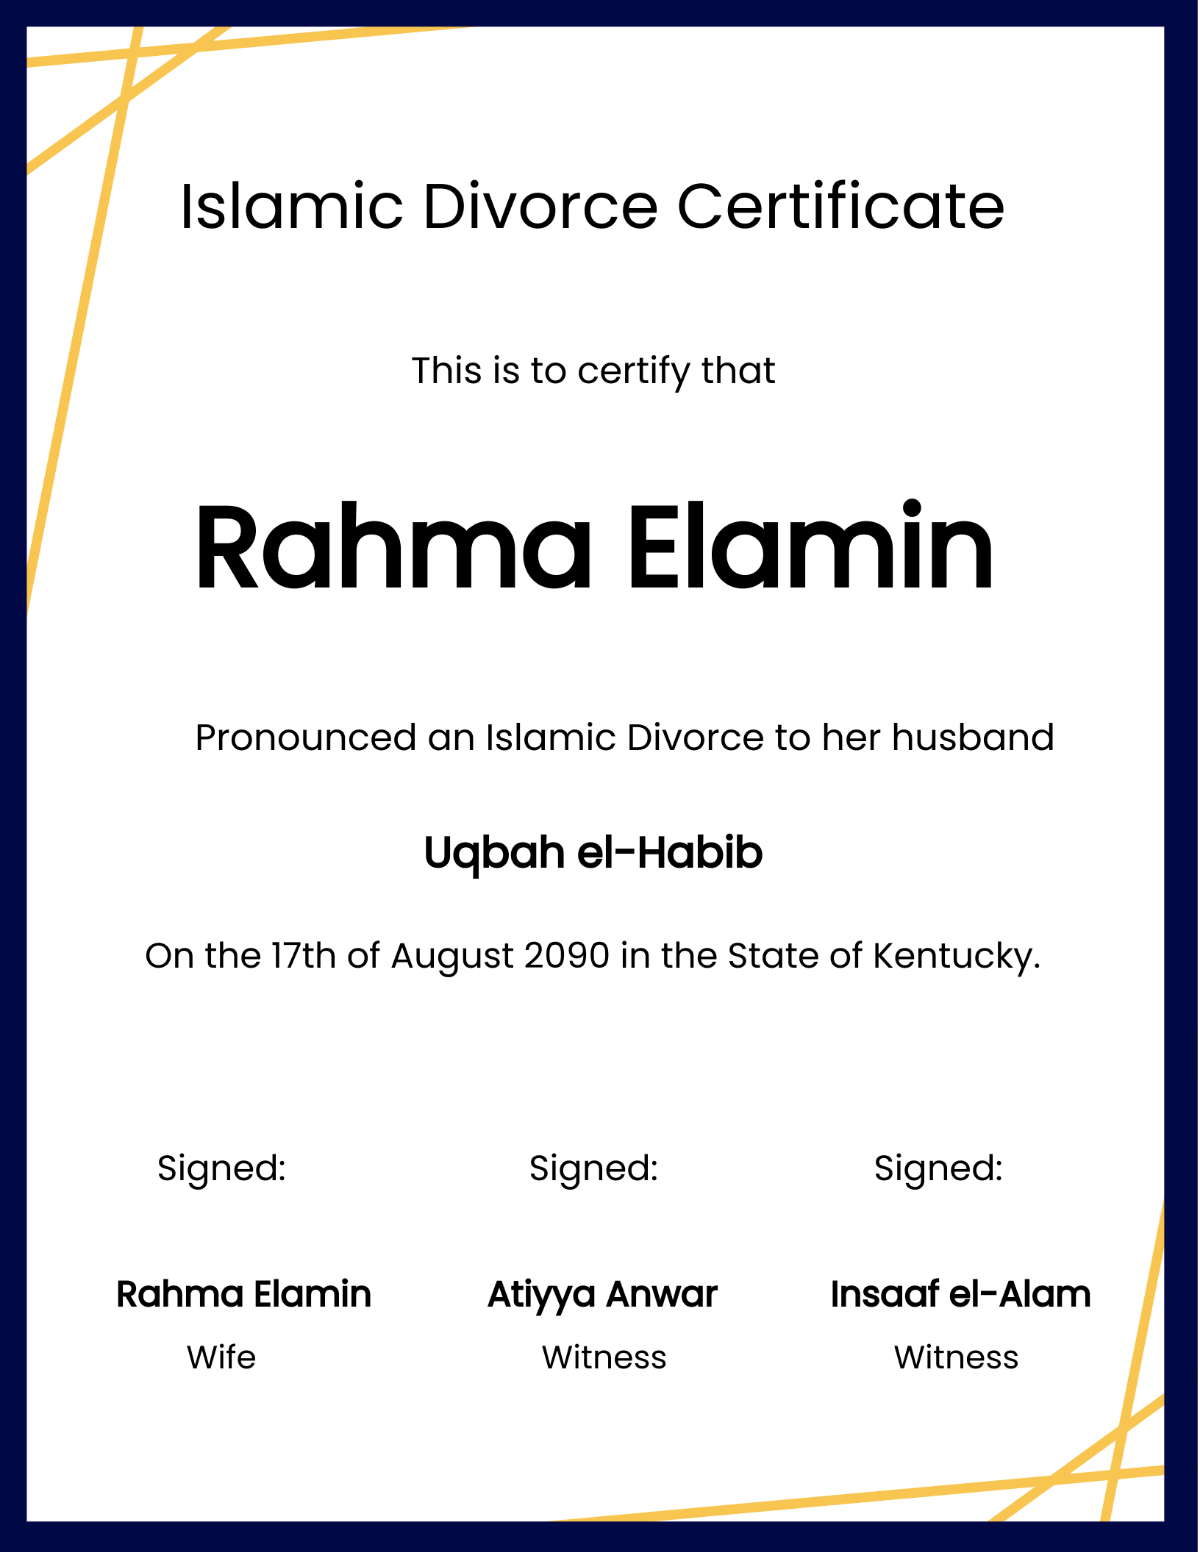 Islamic Divorce Certificate Template